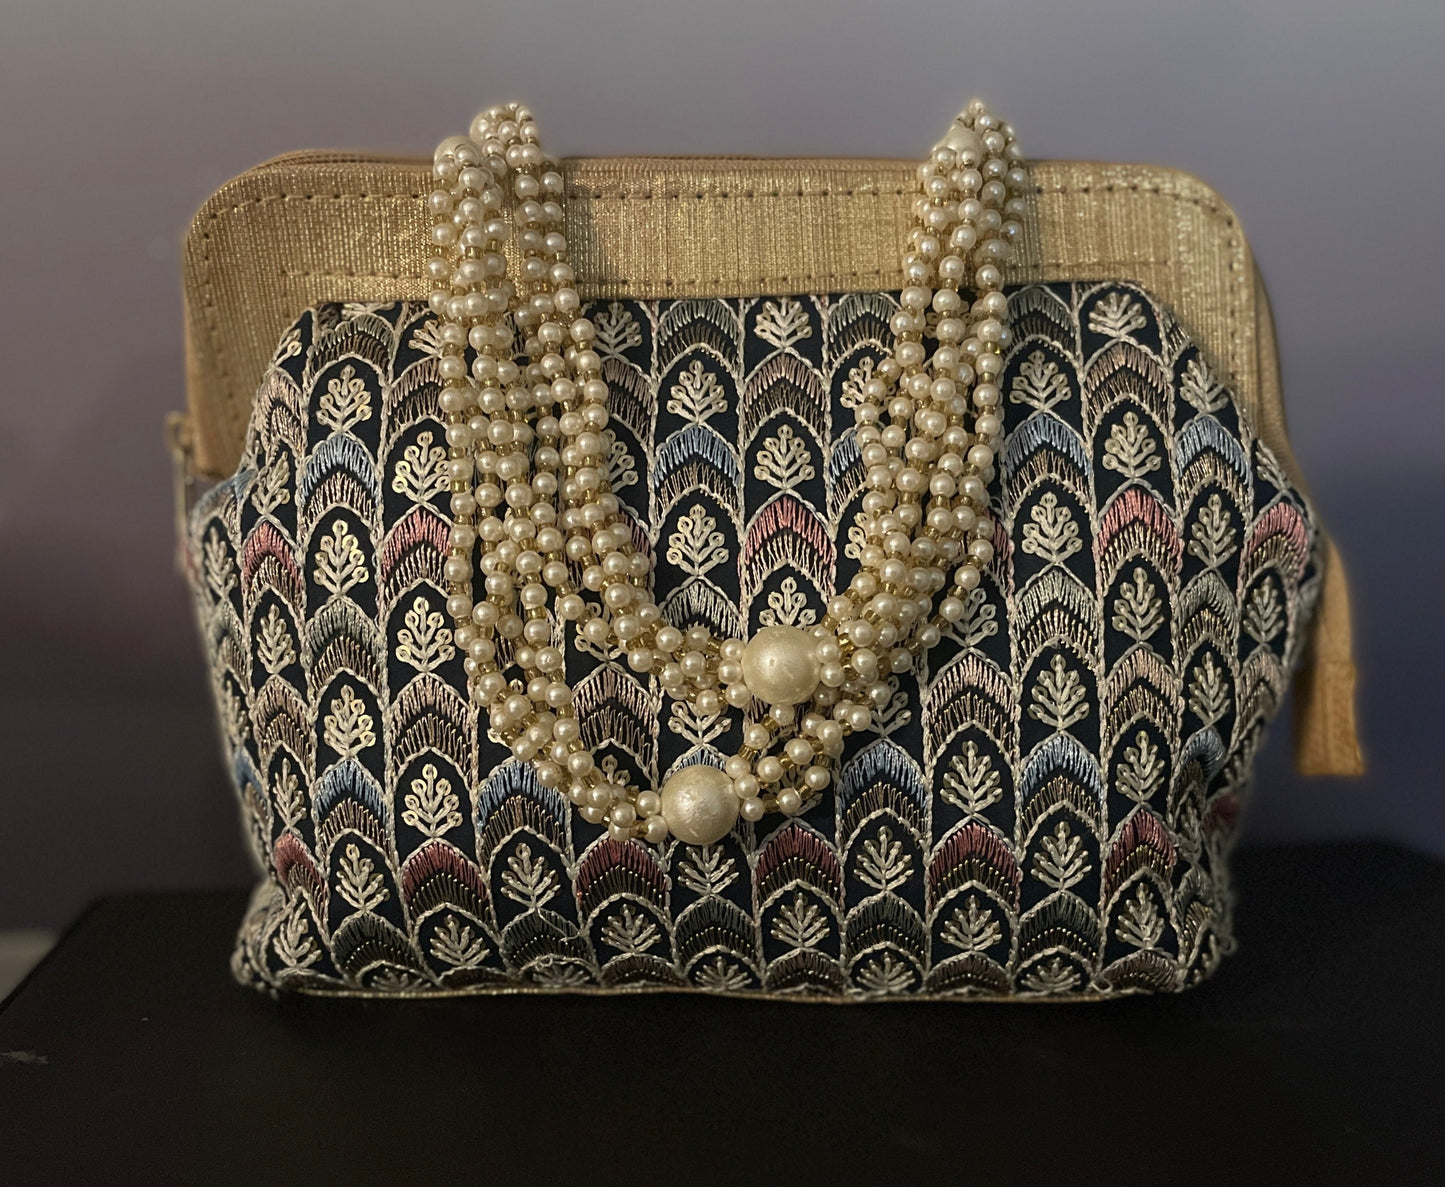 Black - Silk Traditional Ethnic Potli Bag with Pearl Handle